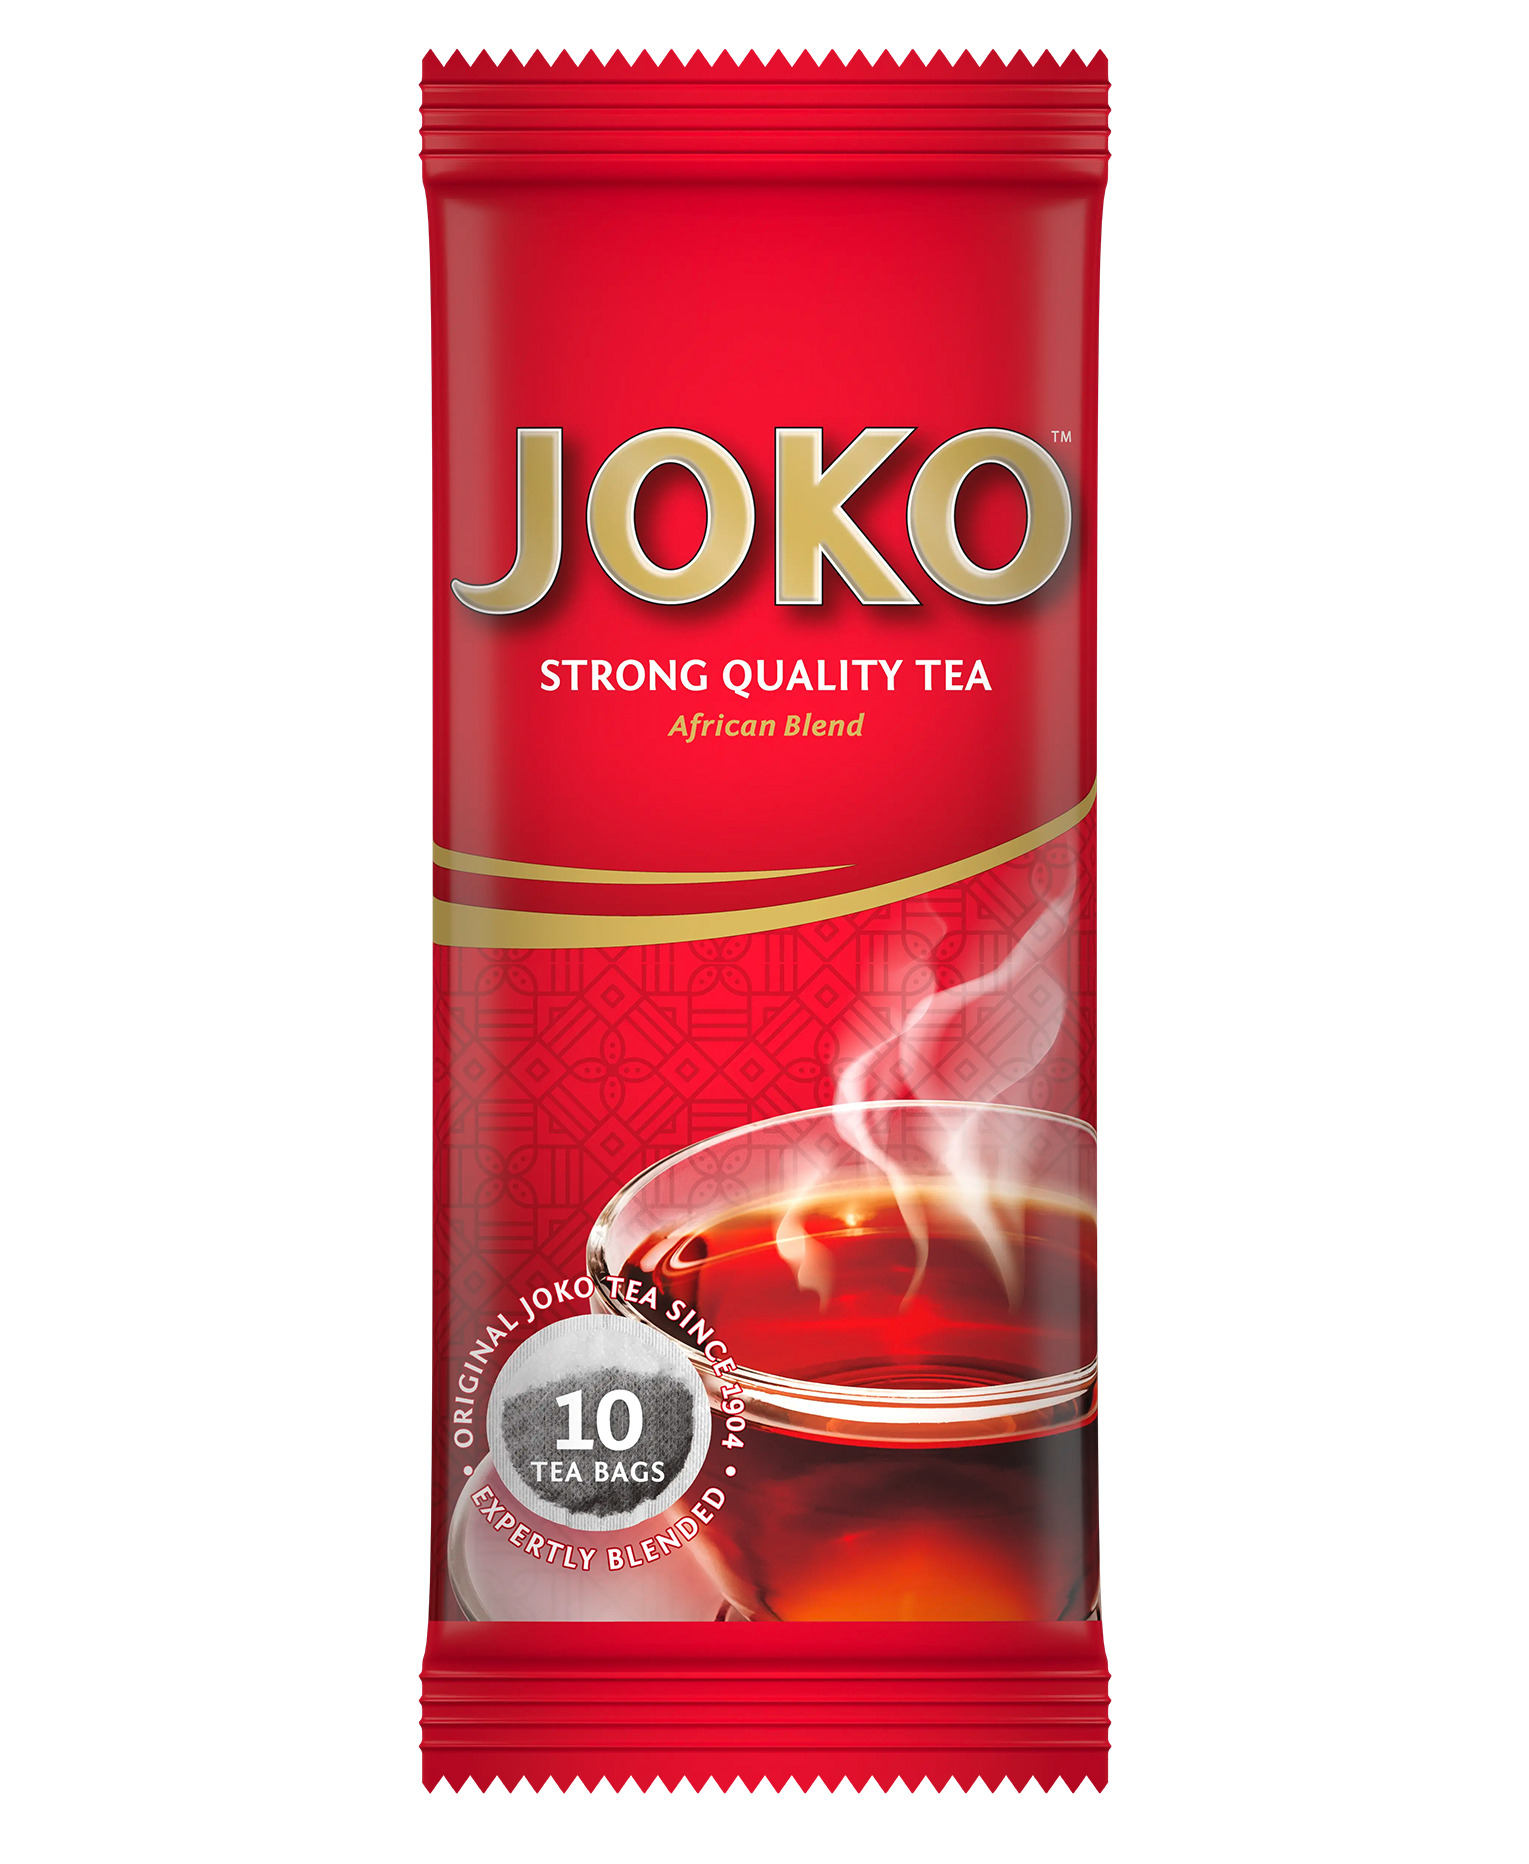  Joko Tagless Teabags 10s image